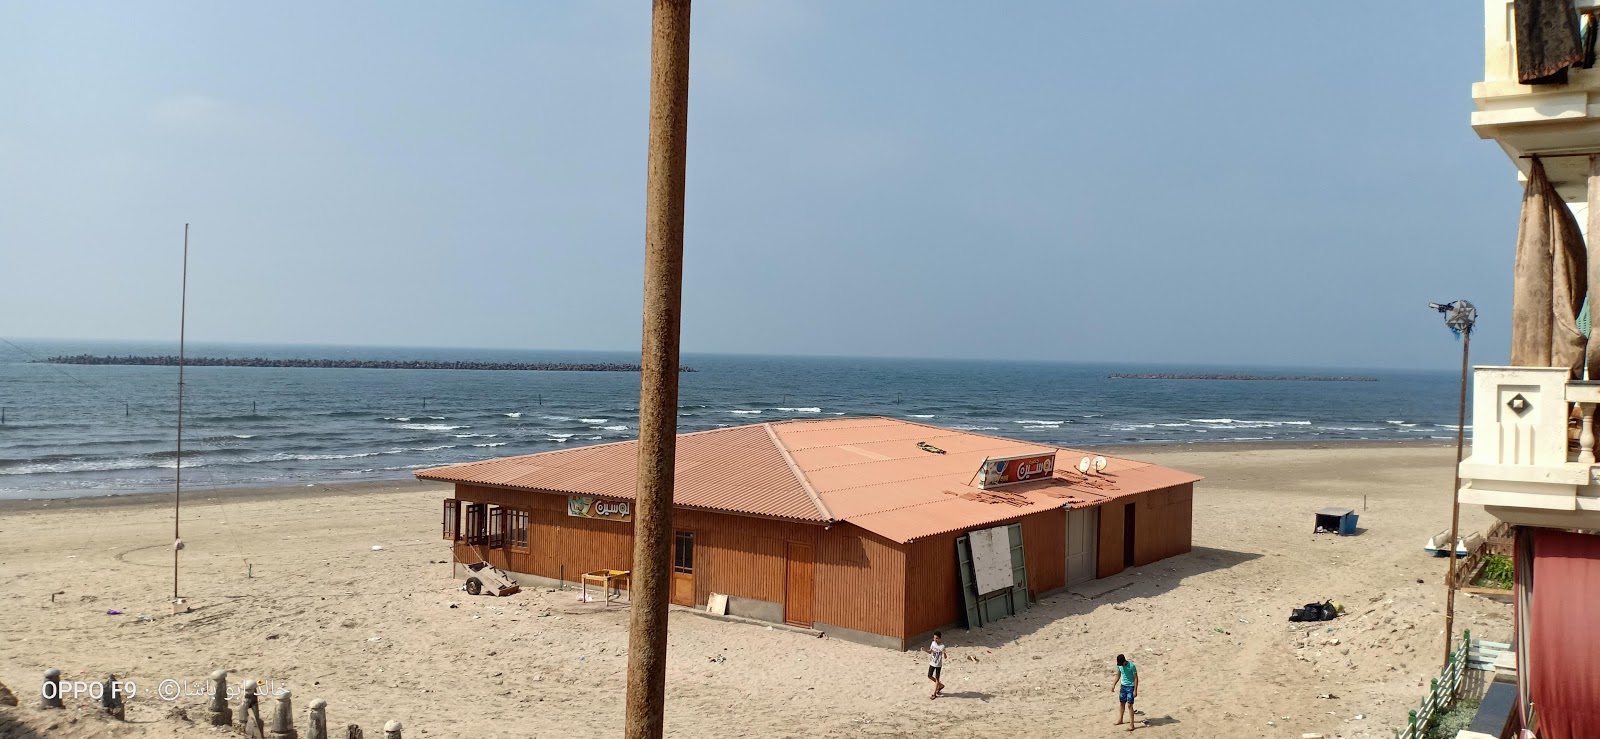 Foto de Ras El-Bar Beach - lugar popular entre os apreciadores de relaxamento